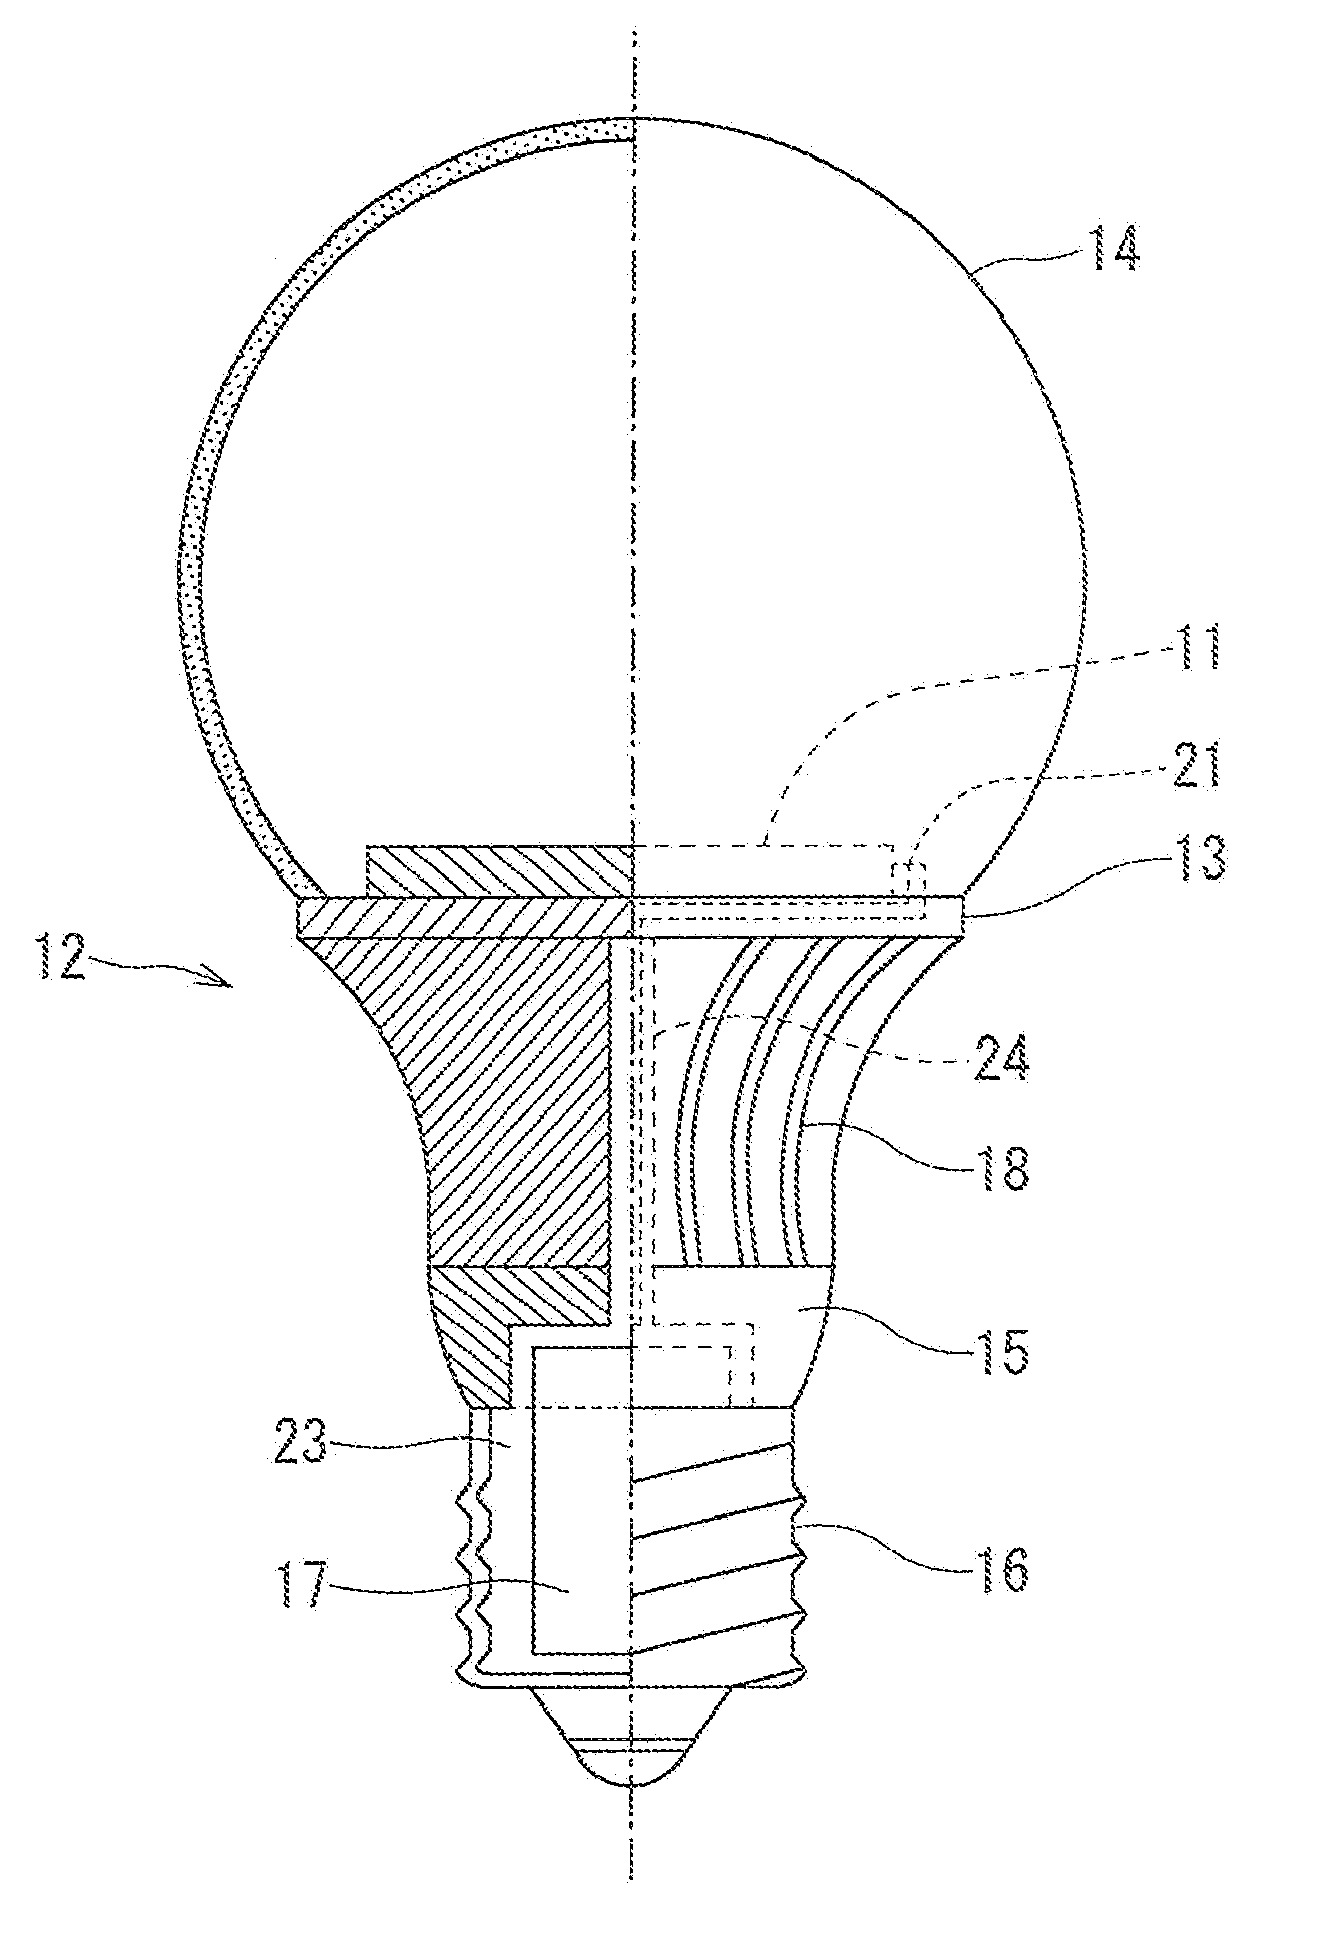 LED bulb and lighting apparatus